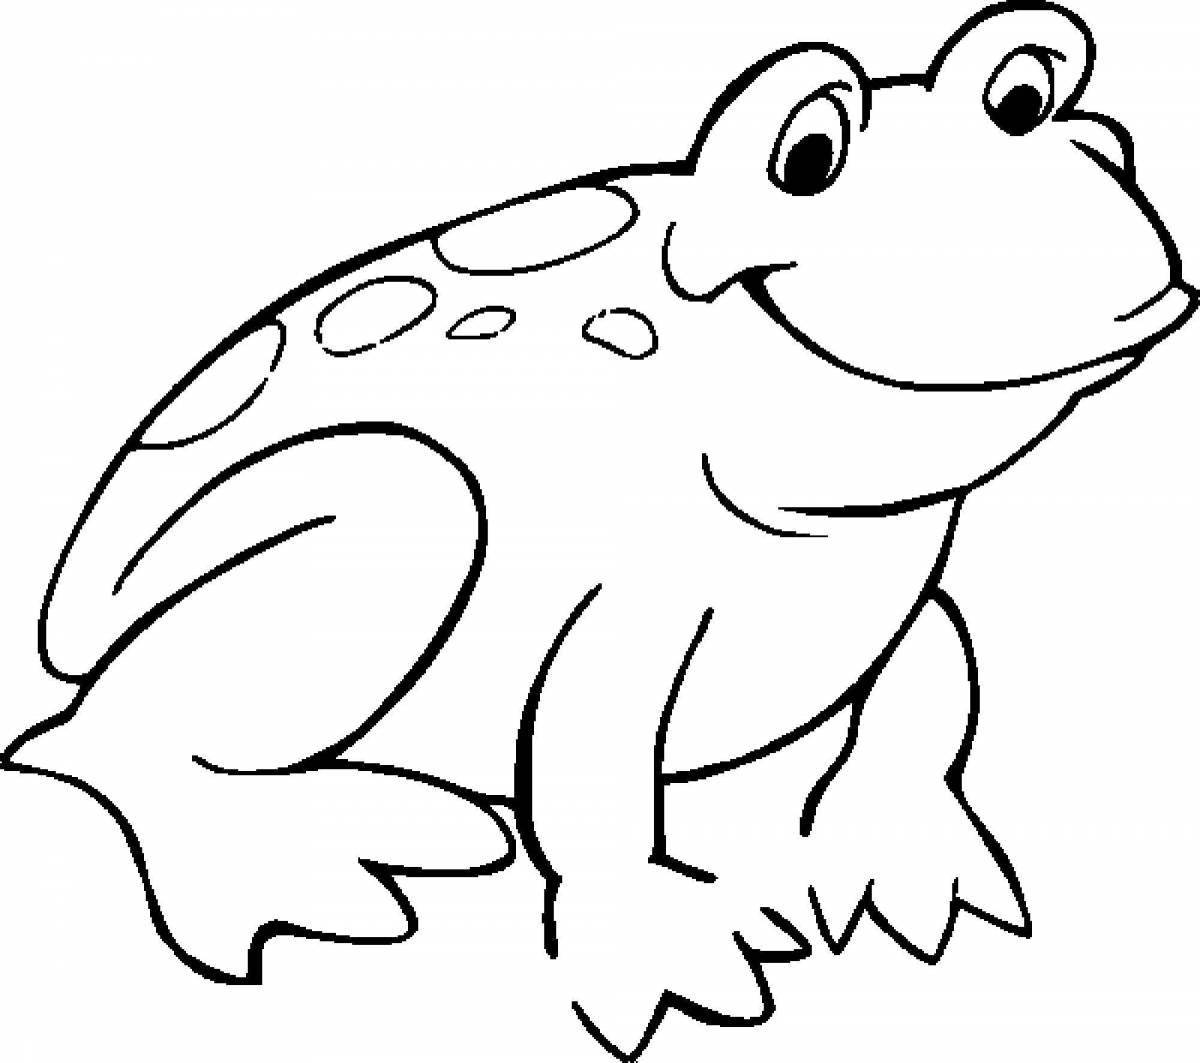 Joyful frog coloring book for kids